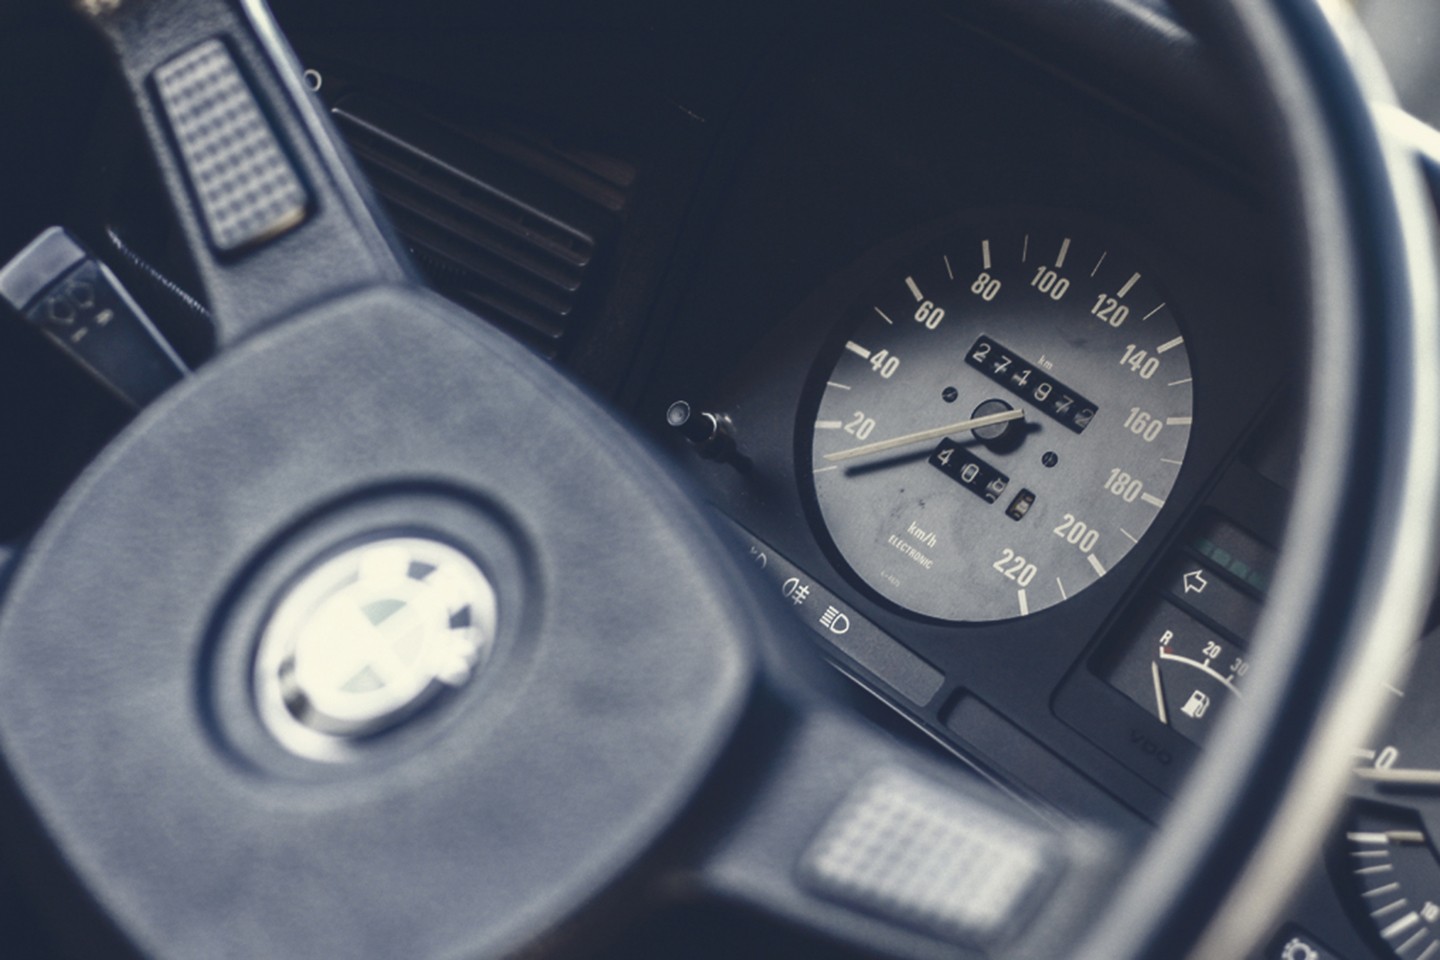 General 1440x960 old car car sports car sport BMW speedometer car interior vehicle numbers